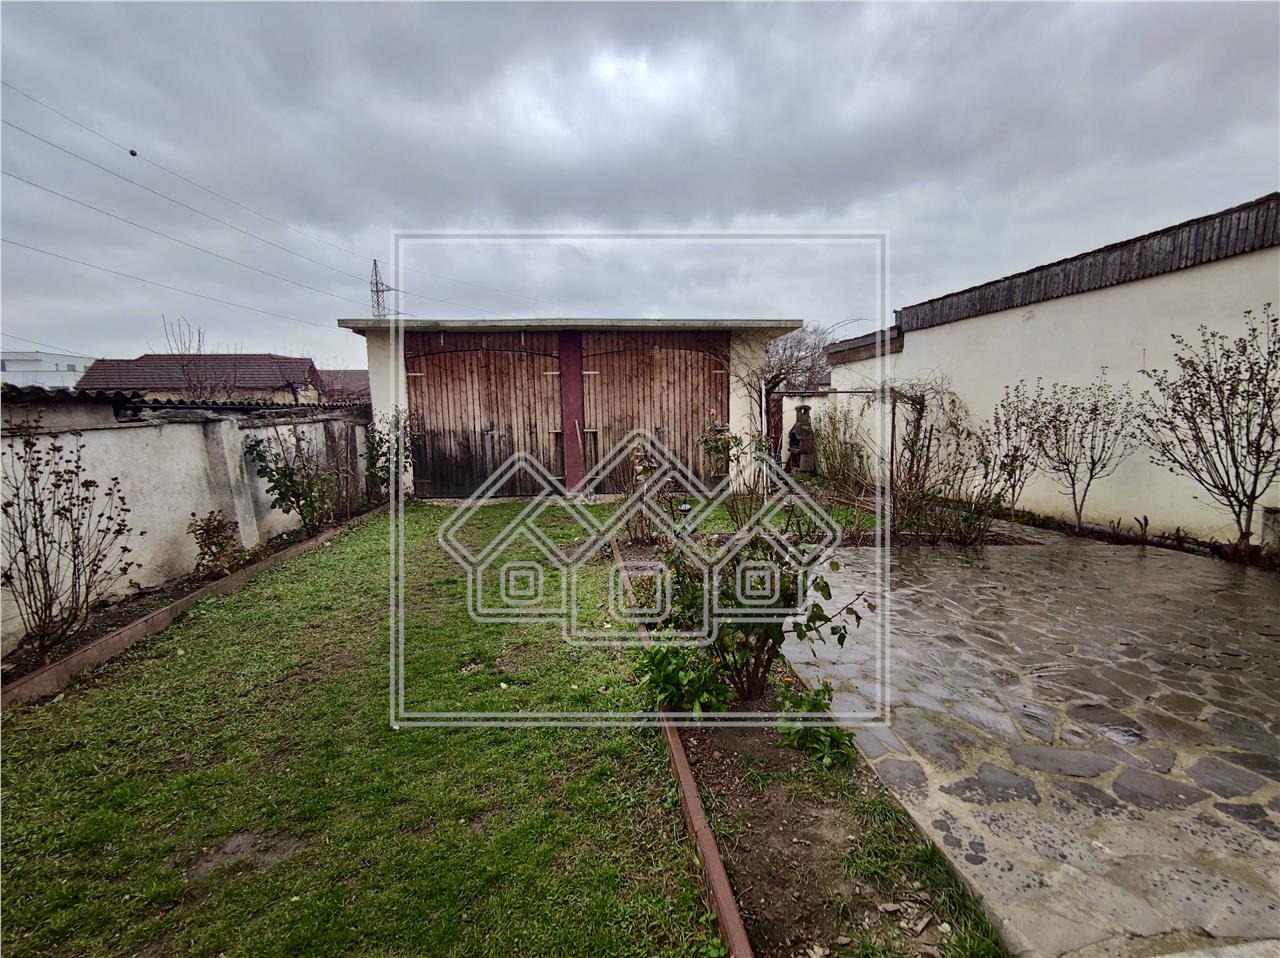 House for rent in Sibiu - Turnisor - Bieltz area - free yard 500 sqm